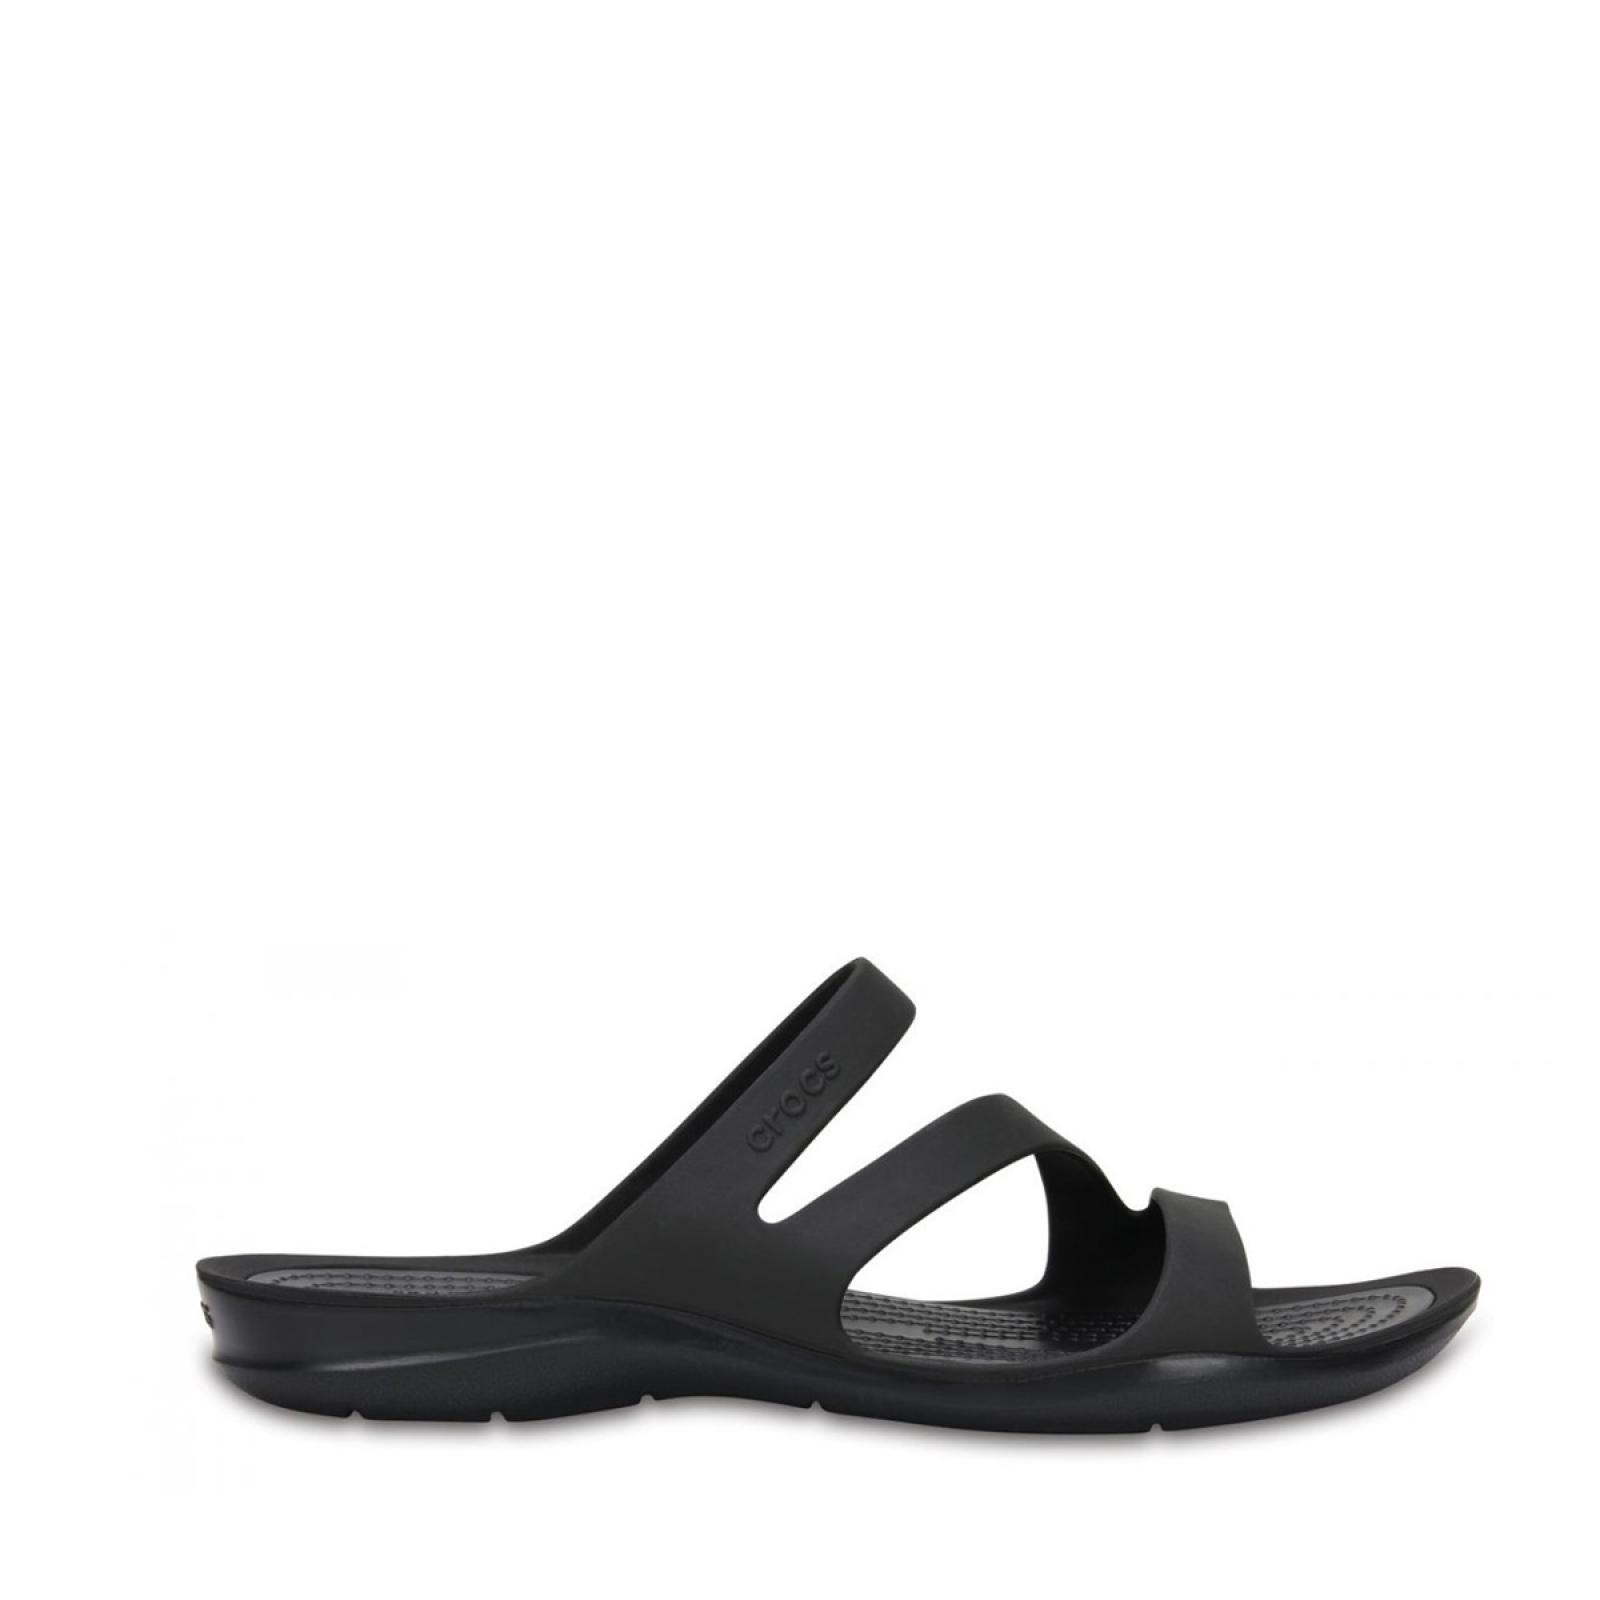 Crocs Sandalo Swiftwater™ W Black Black - 1